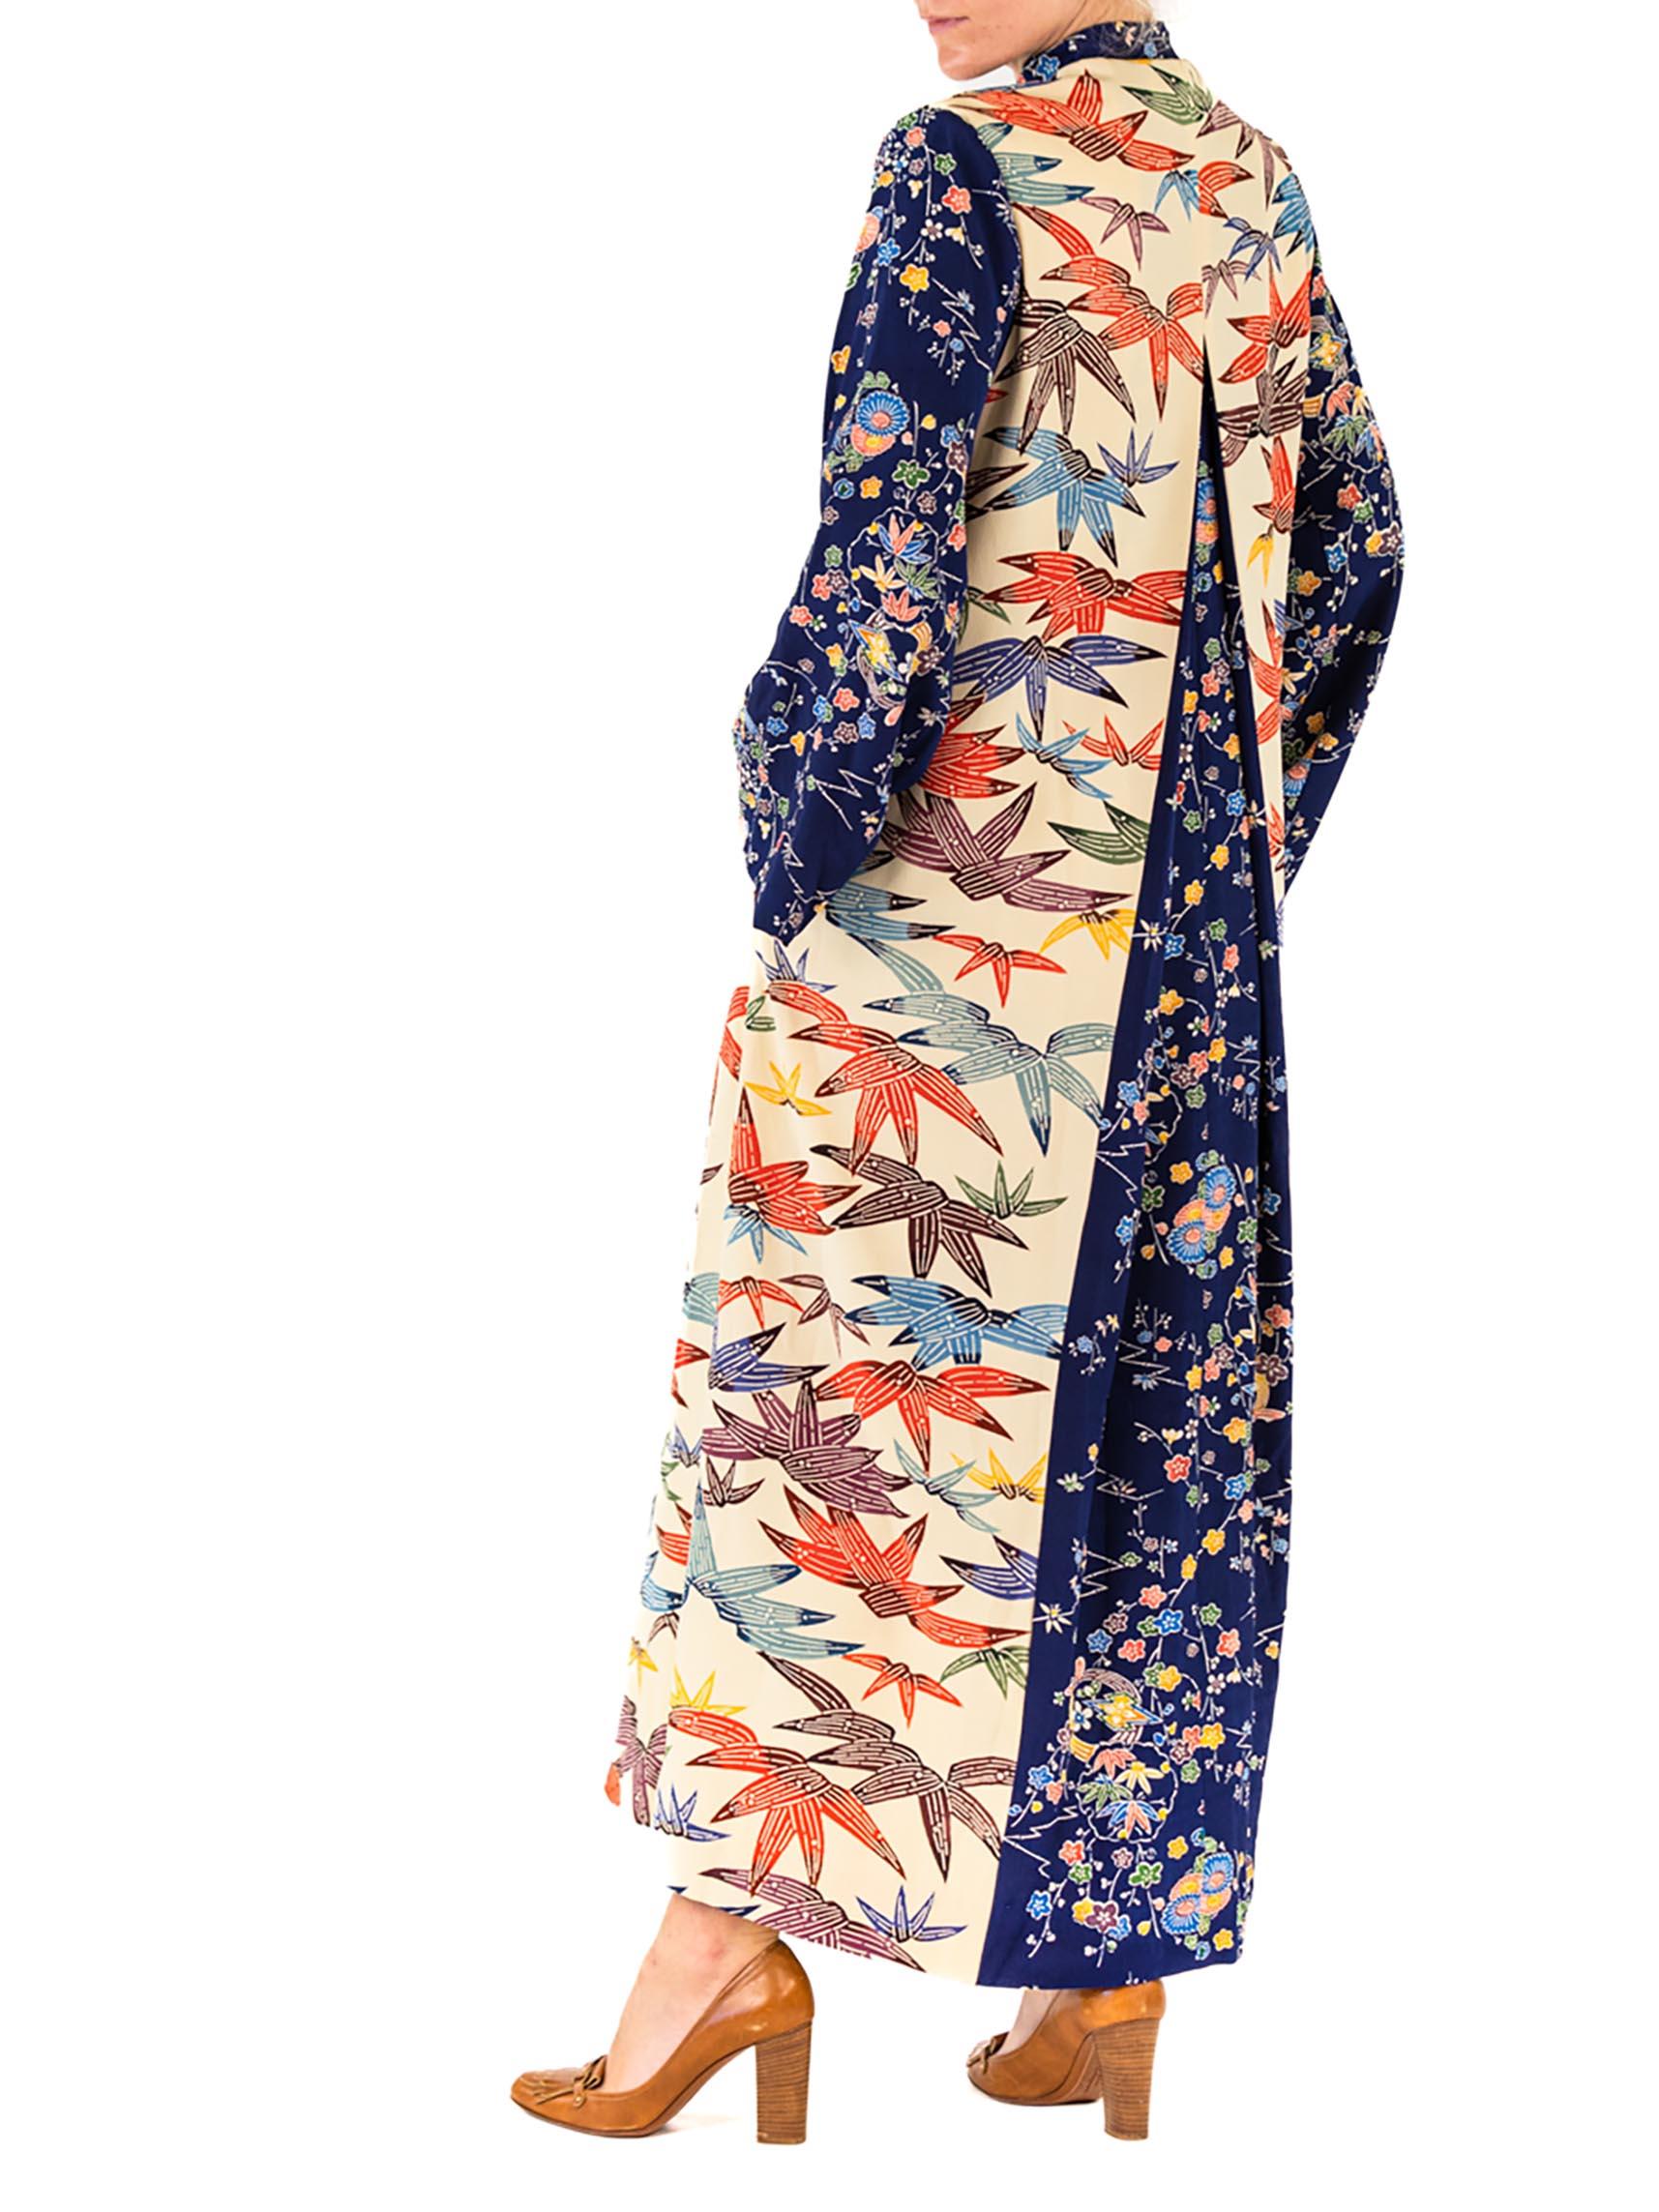 COLLECTION MORPHEW - Robe kimono multicolore en soie crème à manches bleu marine en vente 3